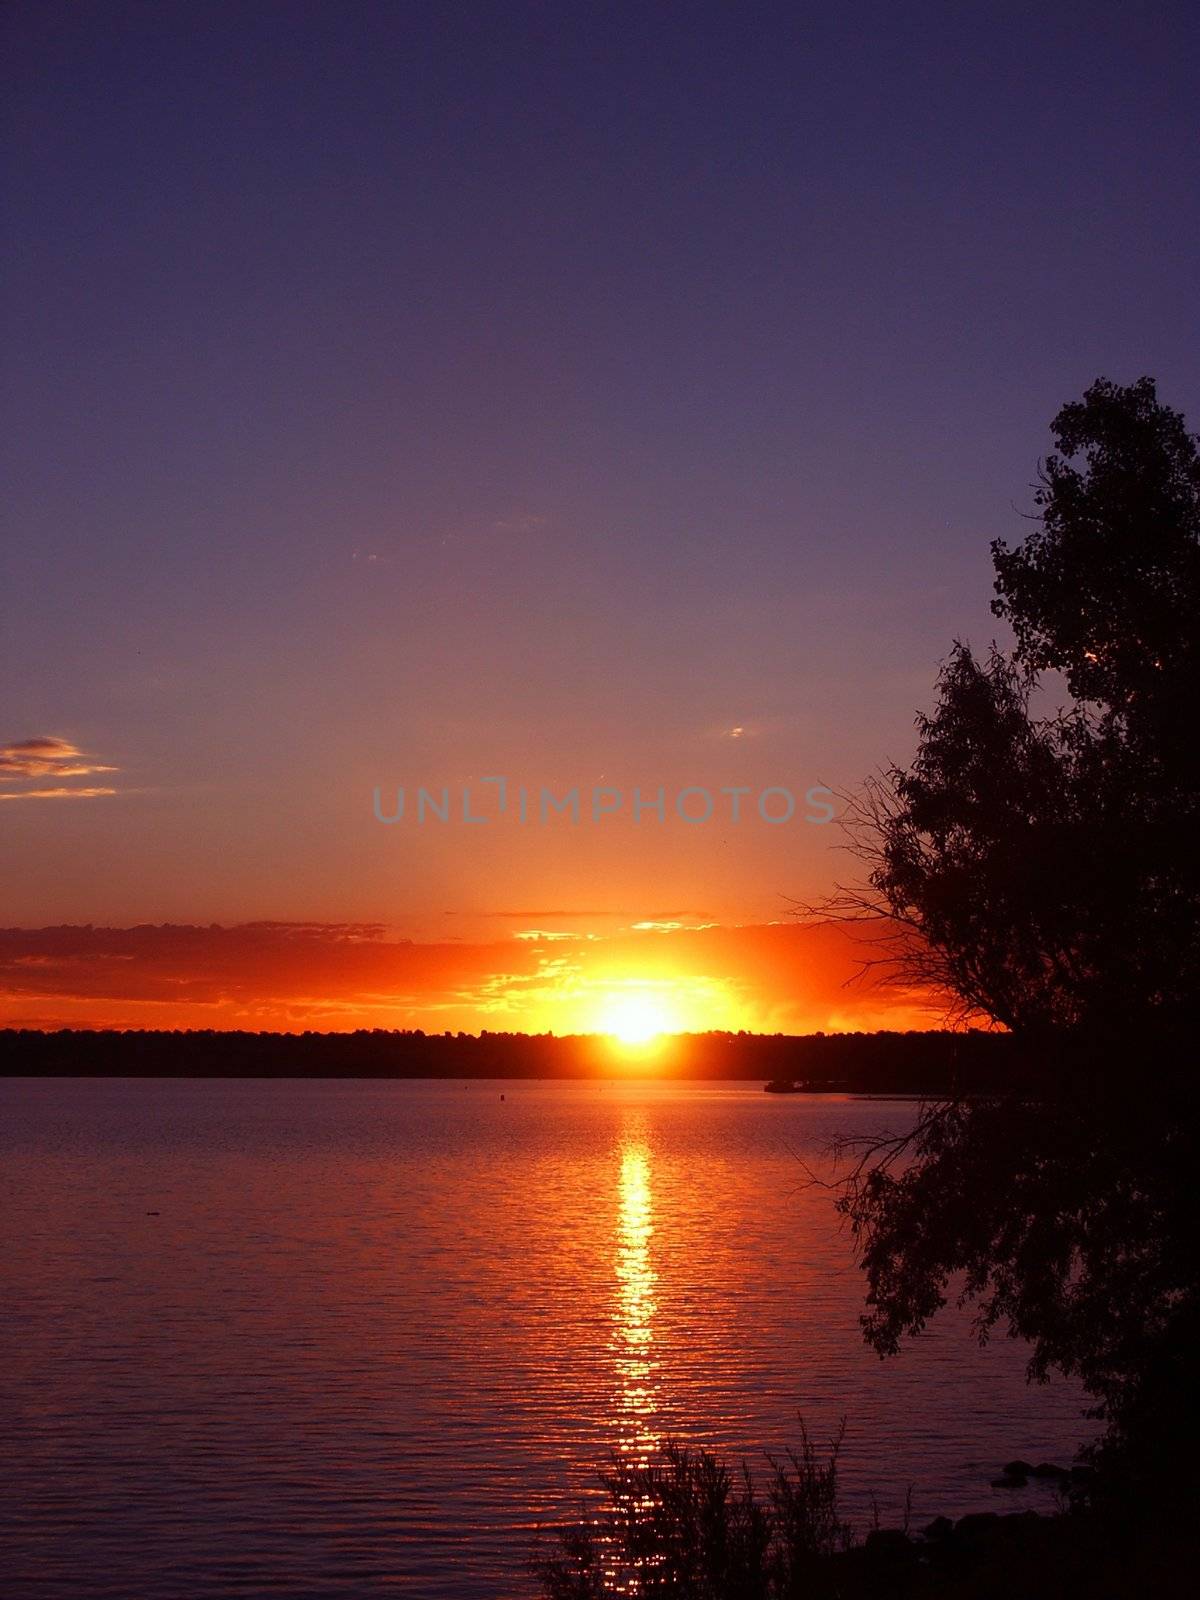 Sunrise with trees on a lake by jdebordphoto